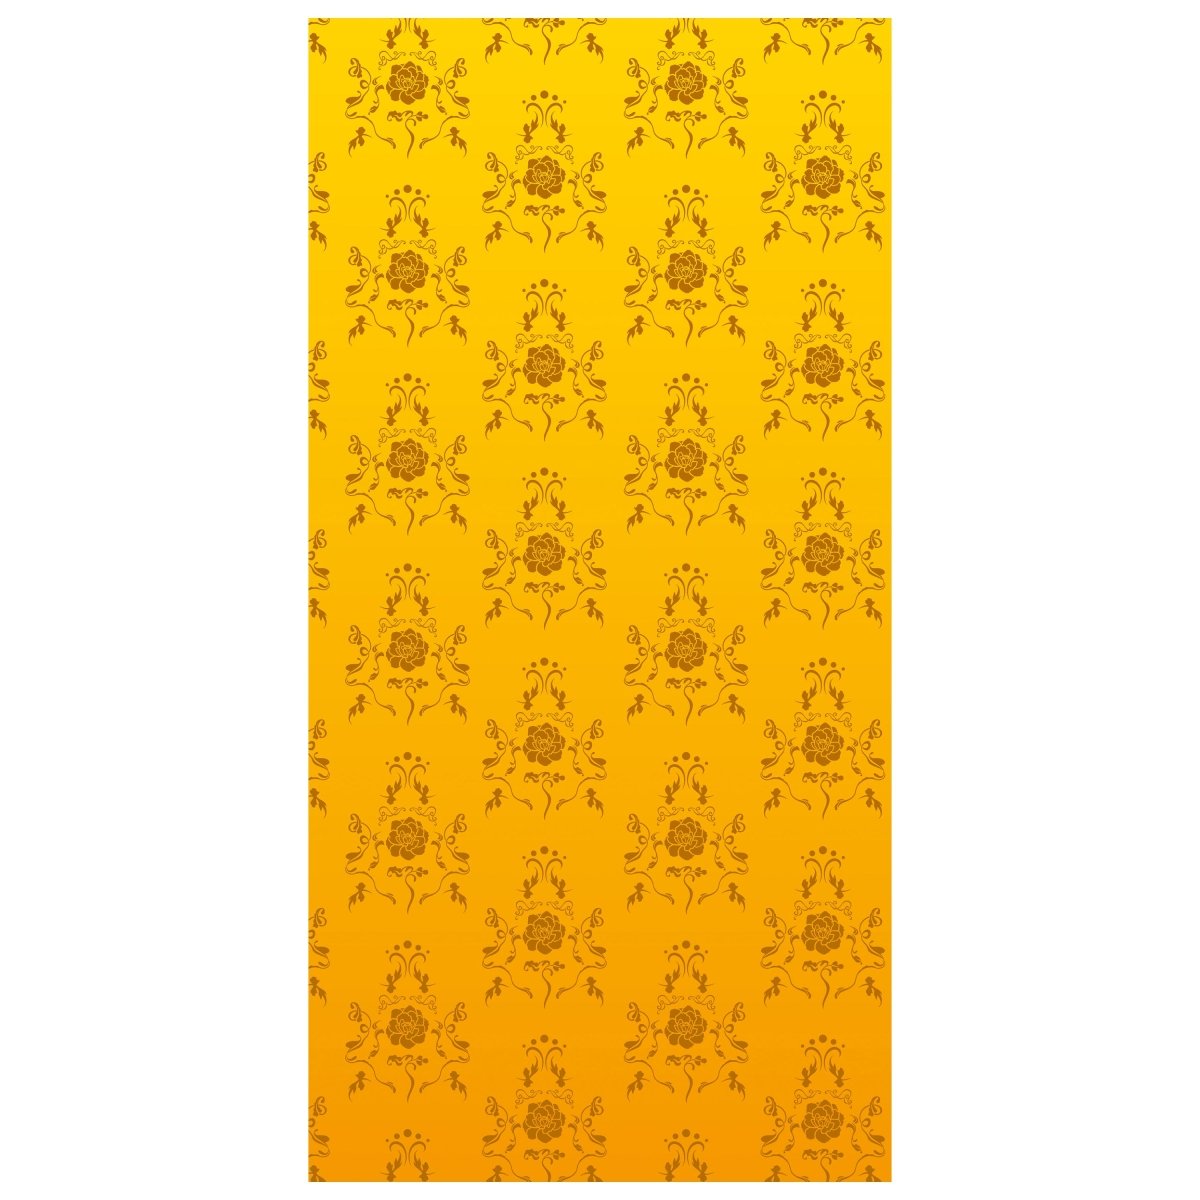 Türtapete Barock Gelb Muster M0118 - Bild 2